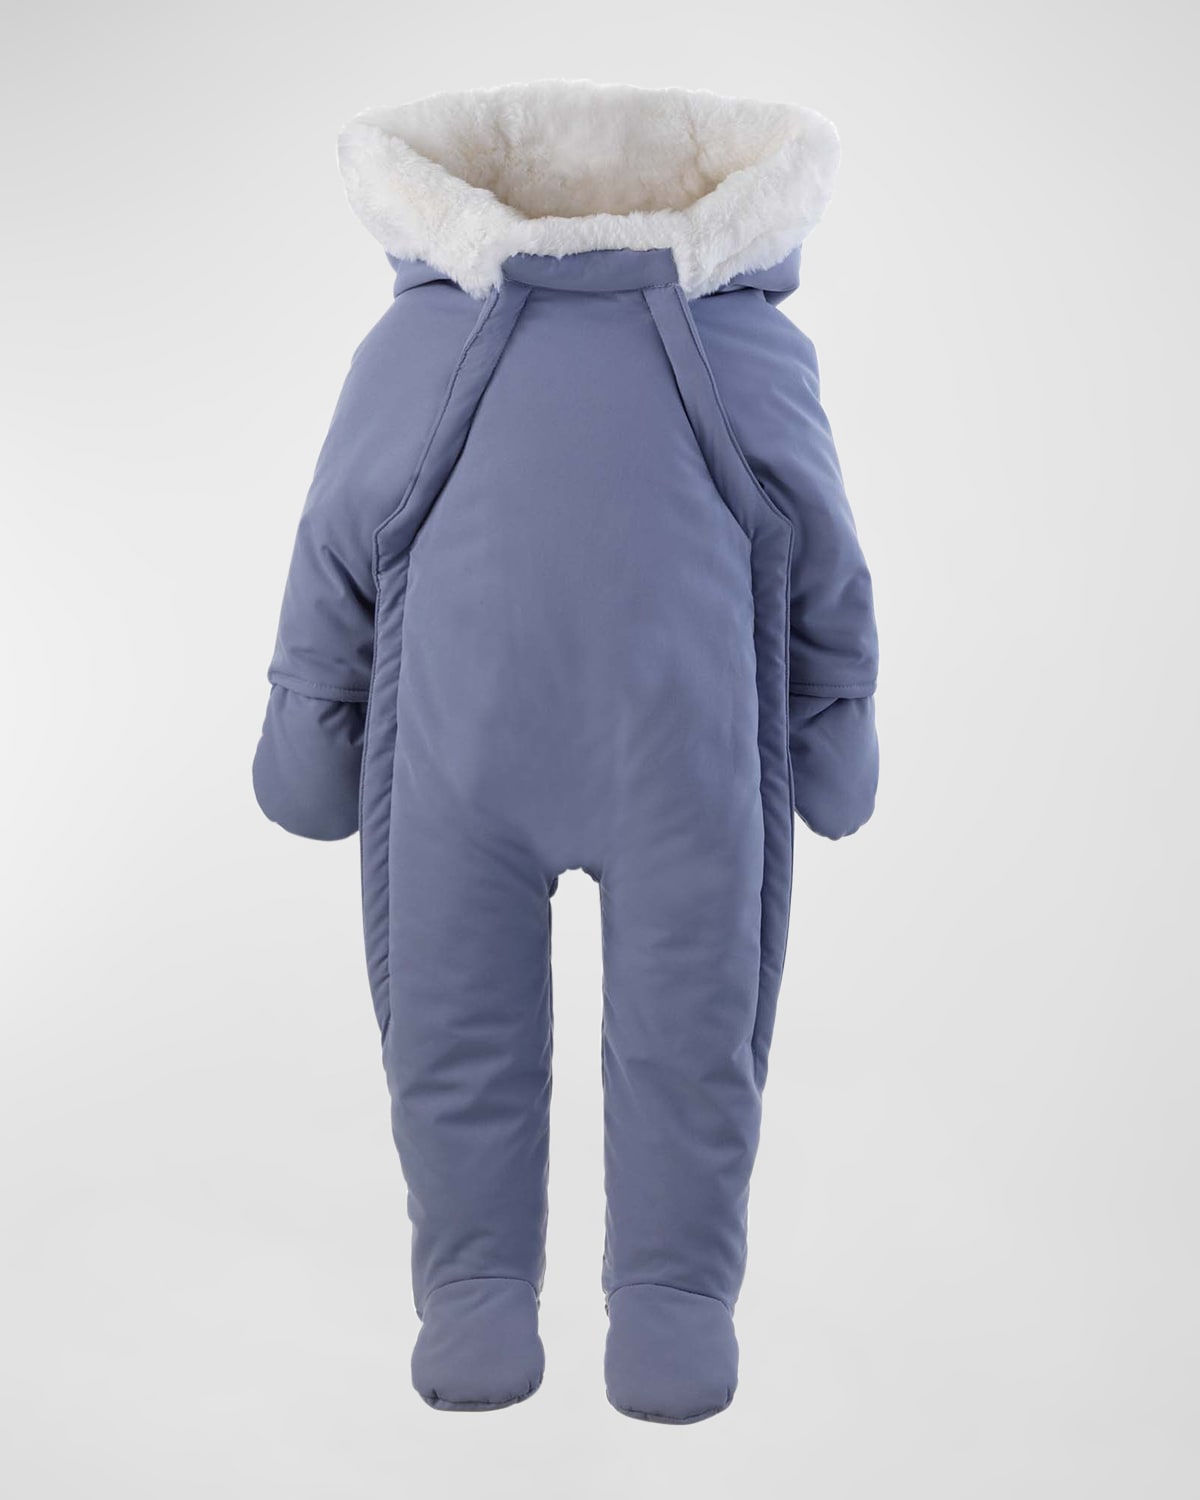 Boy's Faux Fur Padded Snowsuit, Size Newborn-24M